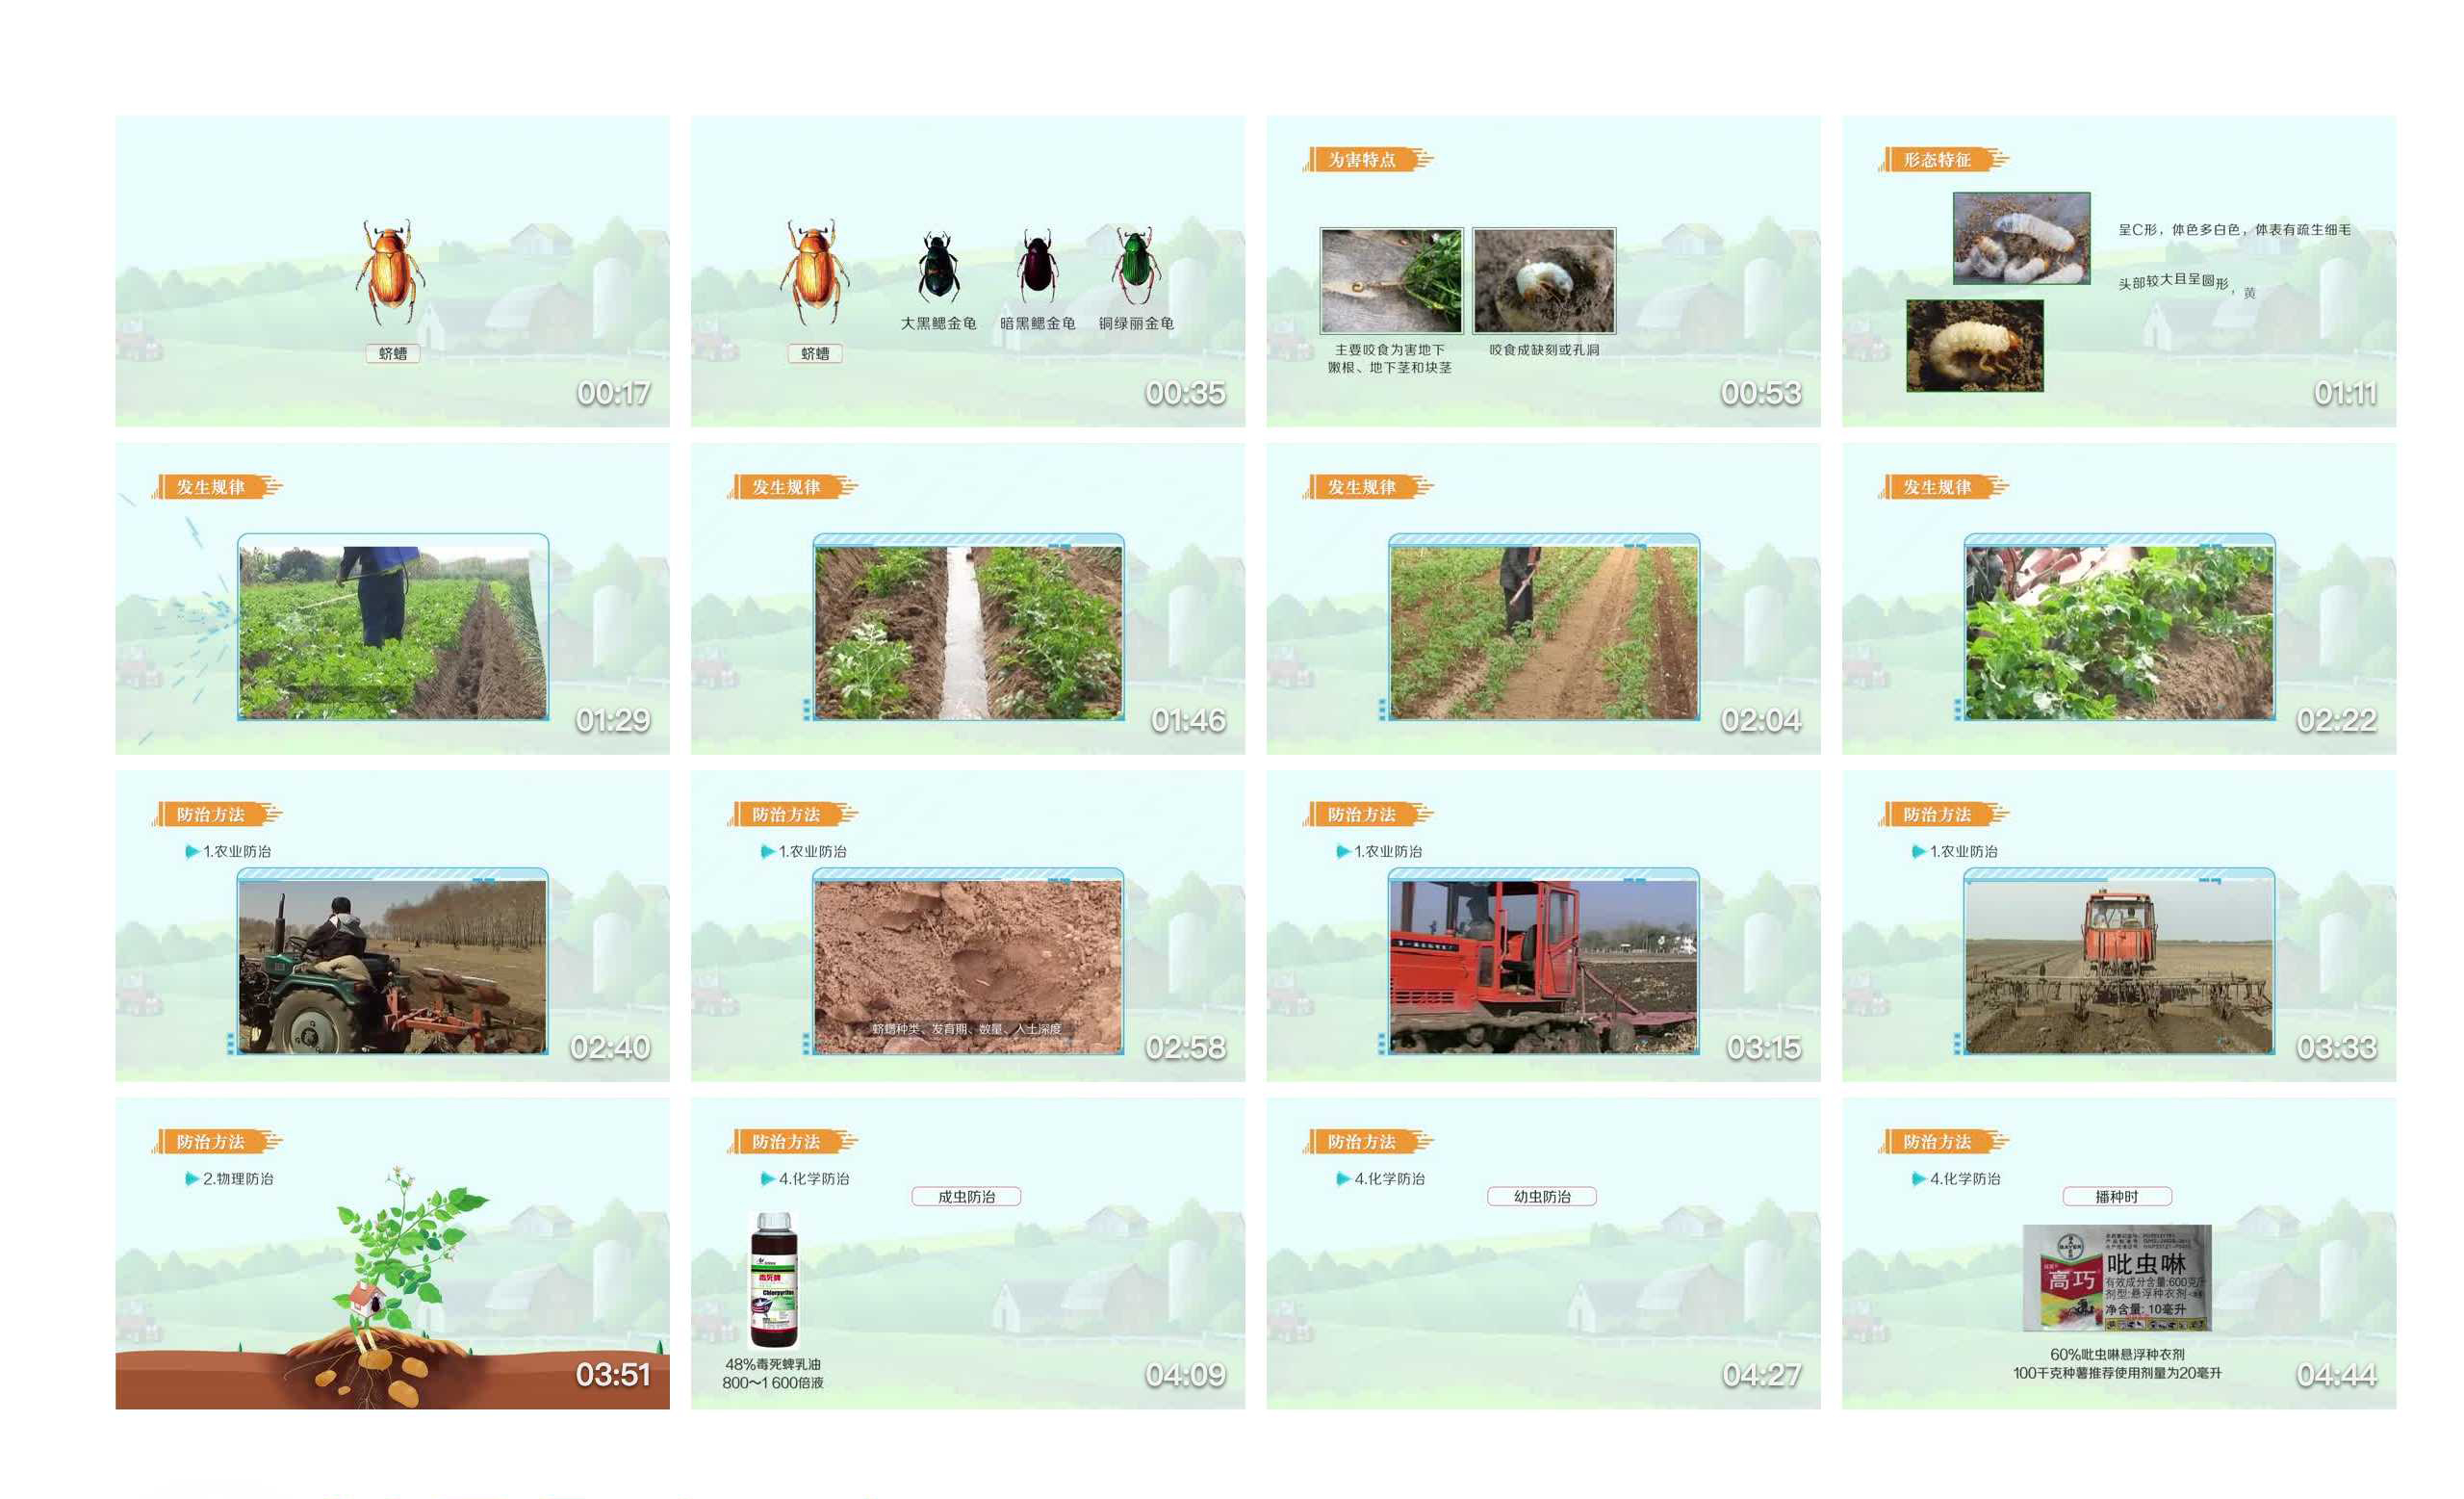 PPT动画-马铃薯系列蛴螬课程样片参考-中国农业出版社